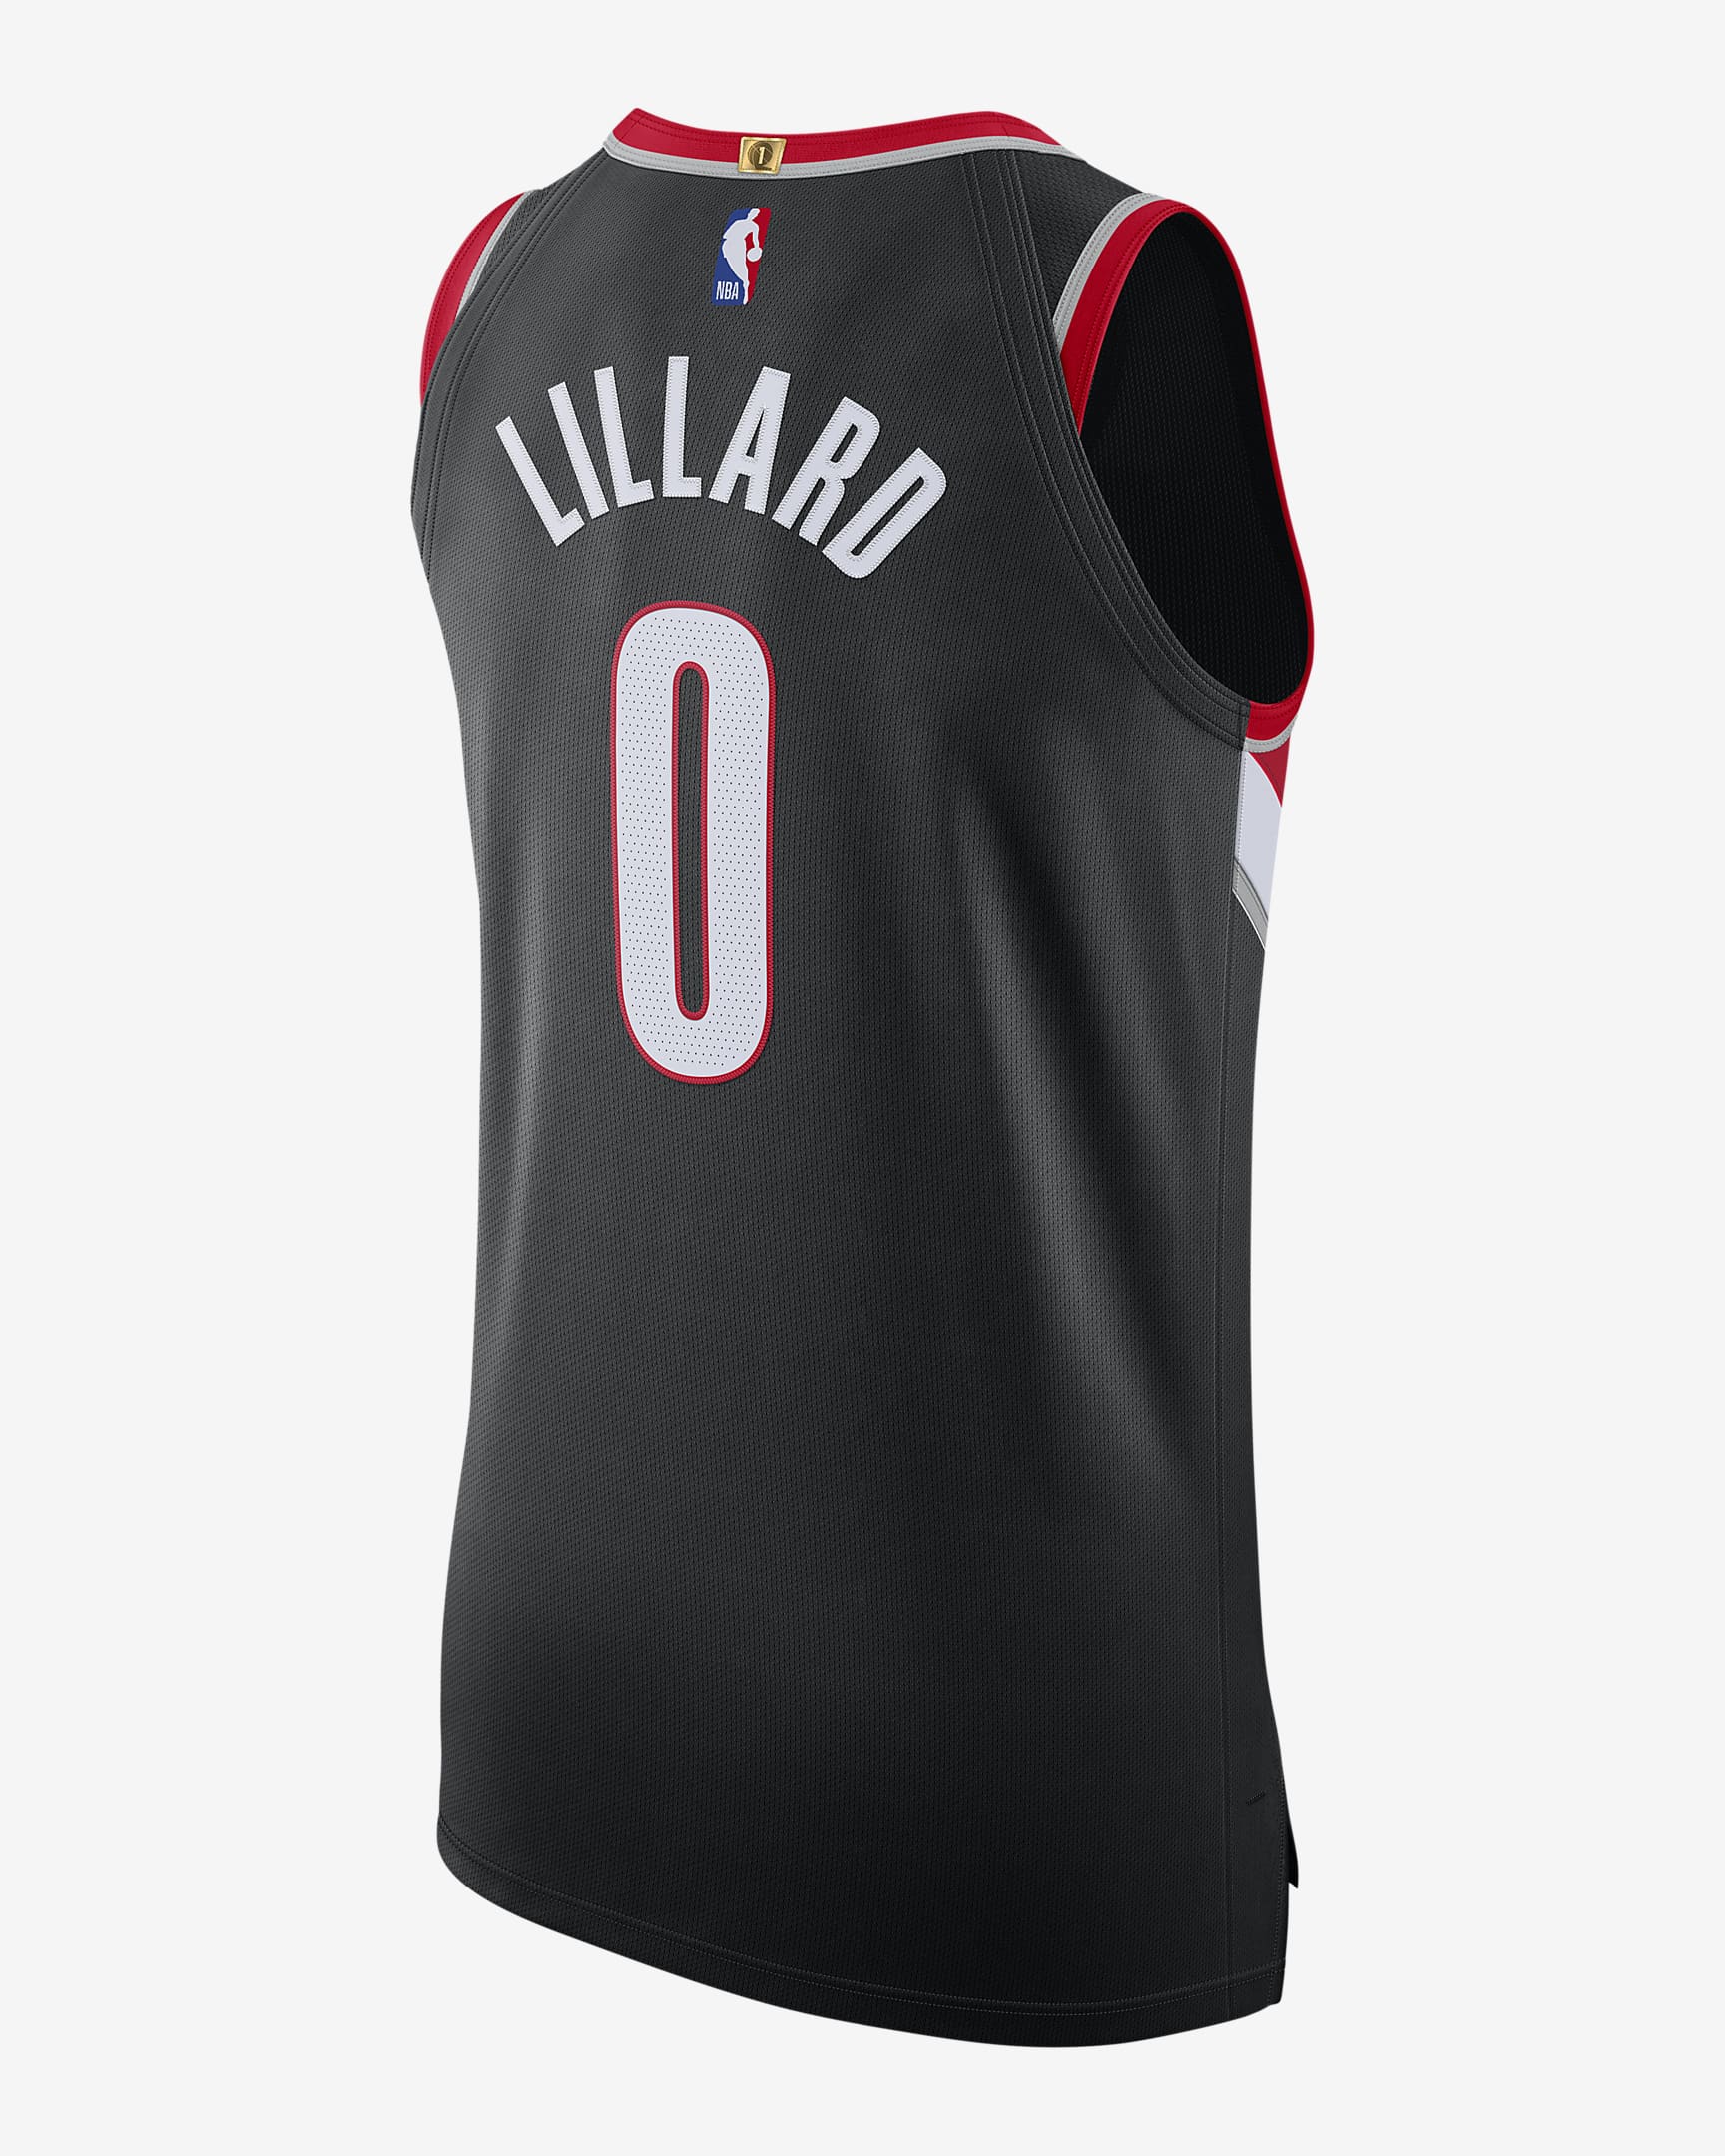 Jersey Nike de la NBA Authentic para hombre Damian Lillard Trail ...